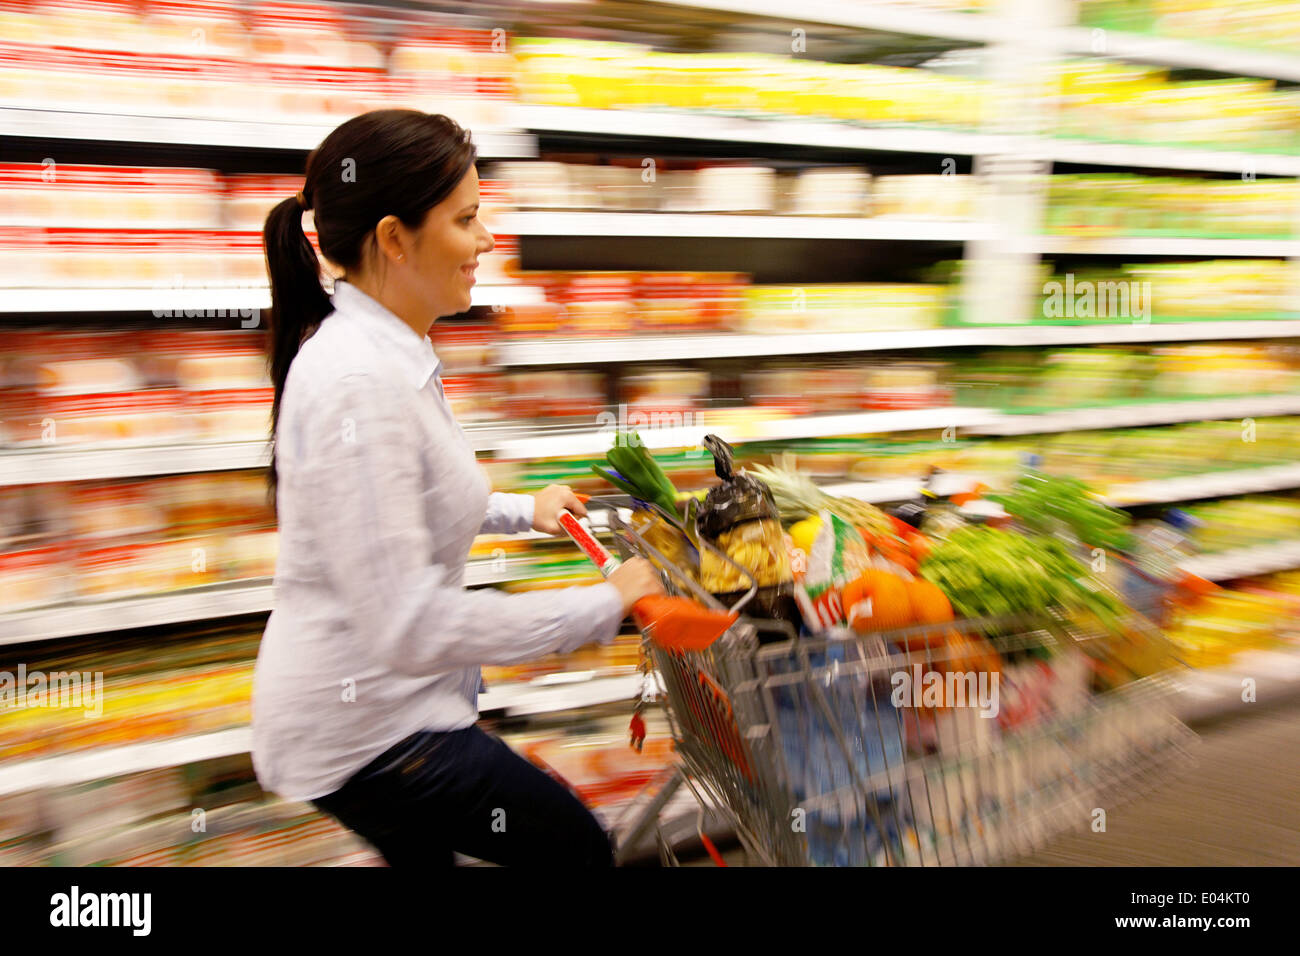 Giovane donna dal carrello al supermercato con l'acquisto, Junge Frau mit Einkaufswagen im Supermarkt beim Einkauf Foto Stock